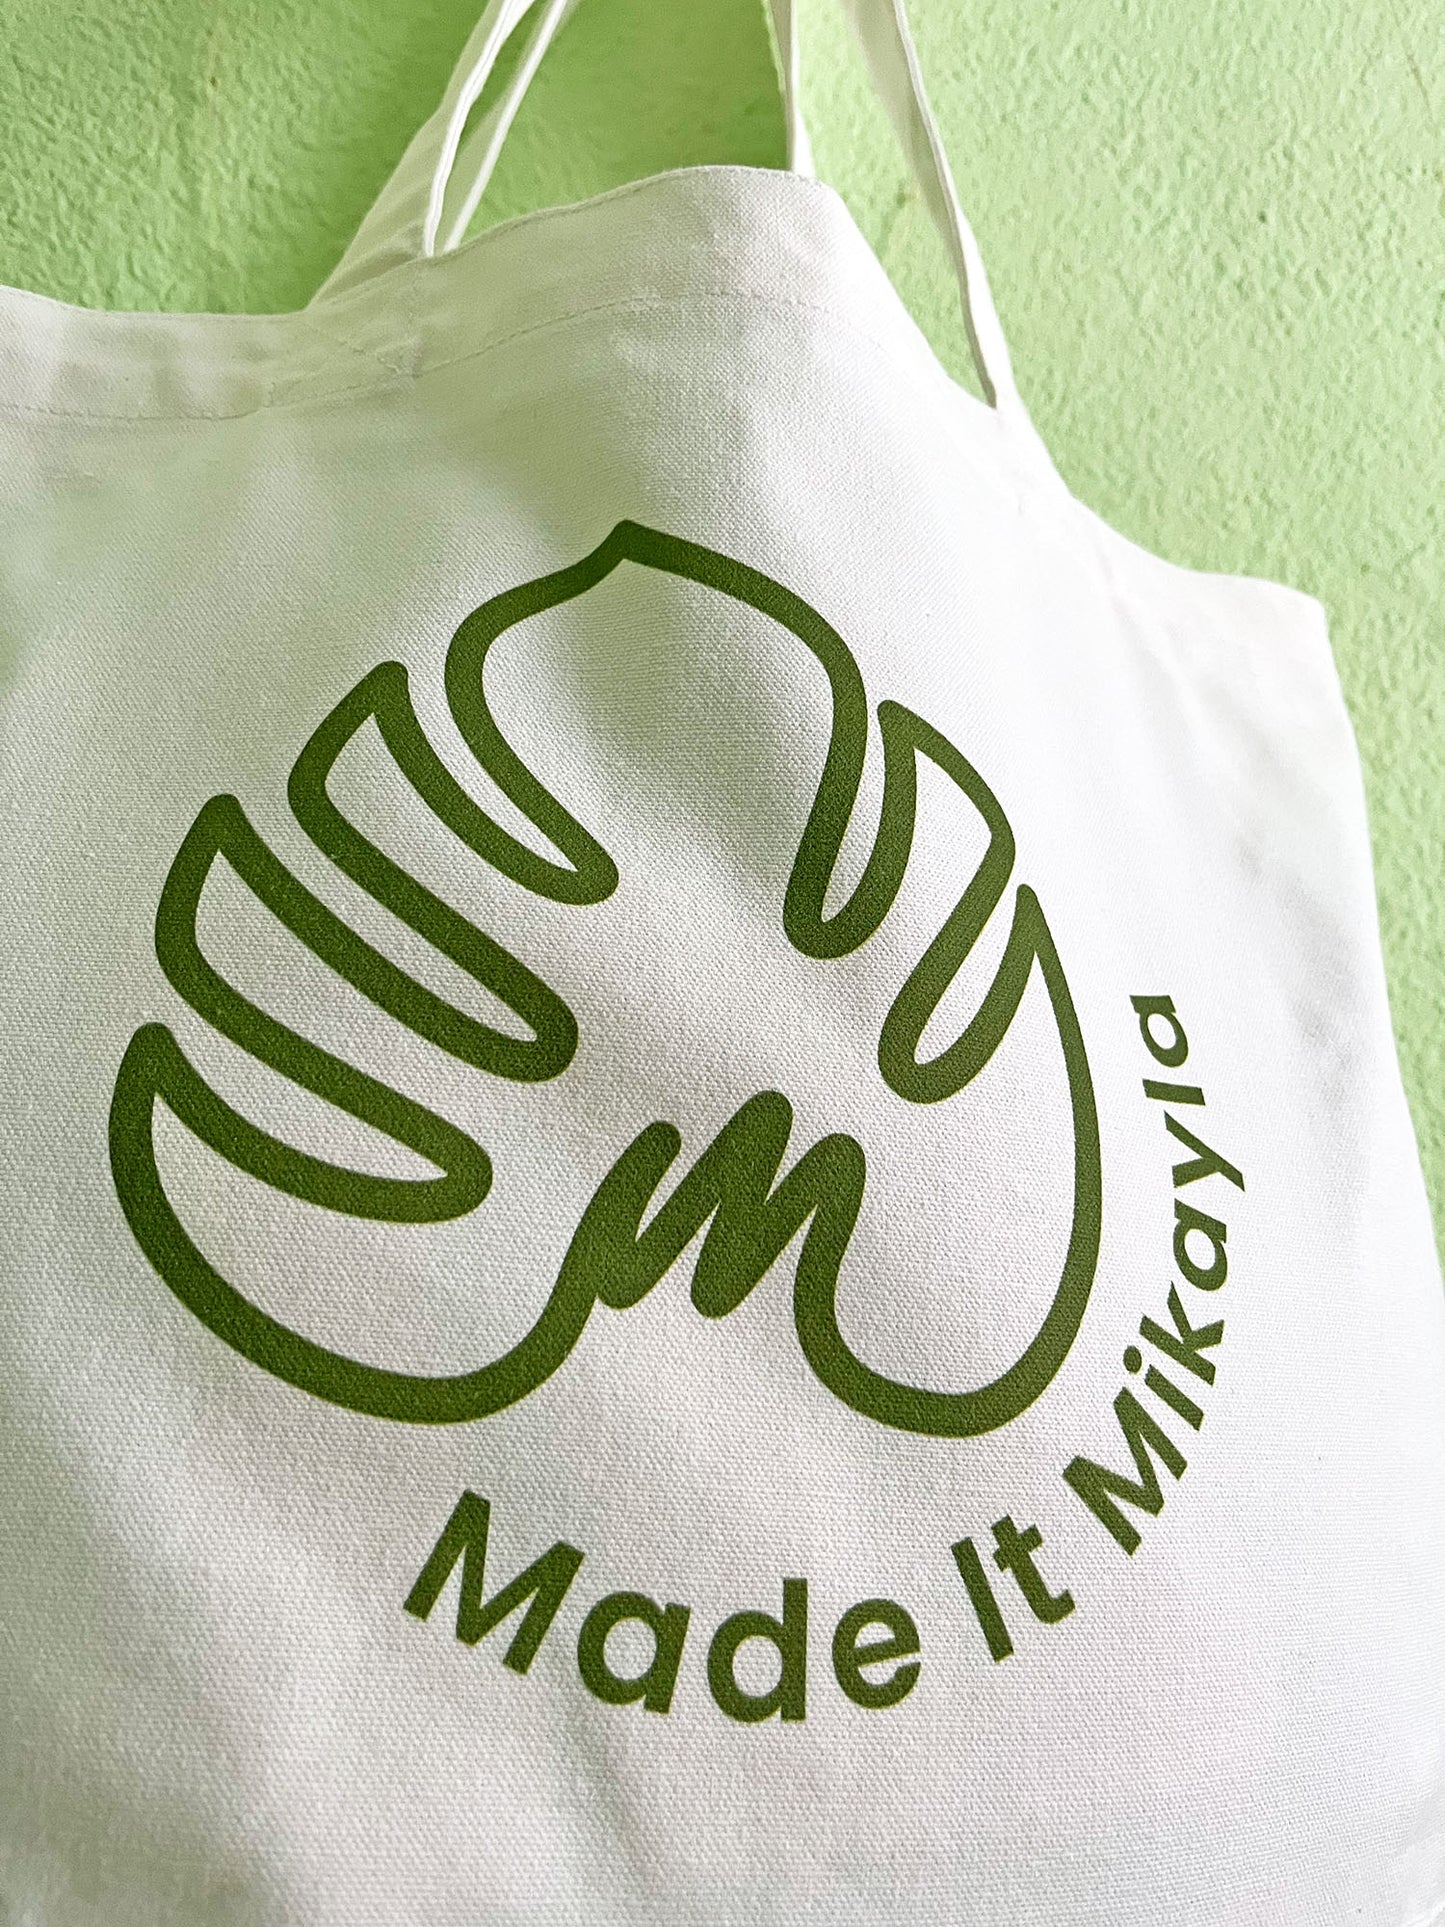 MadeItMikayla Tote Bag | MadeItMikayla